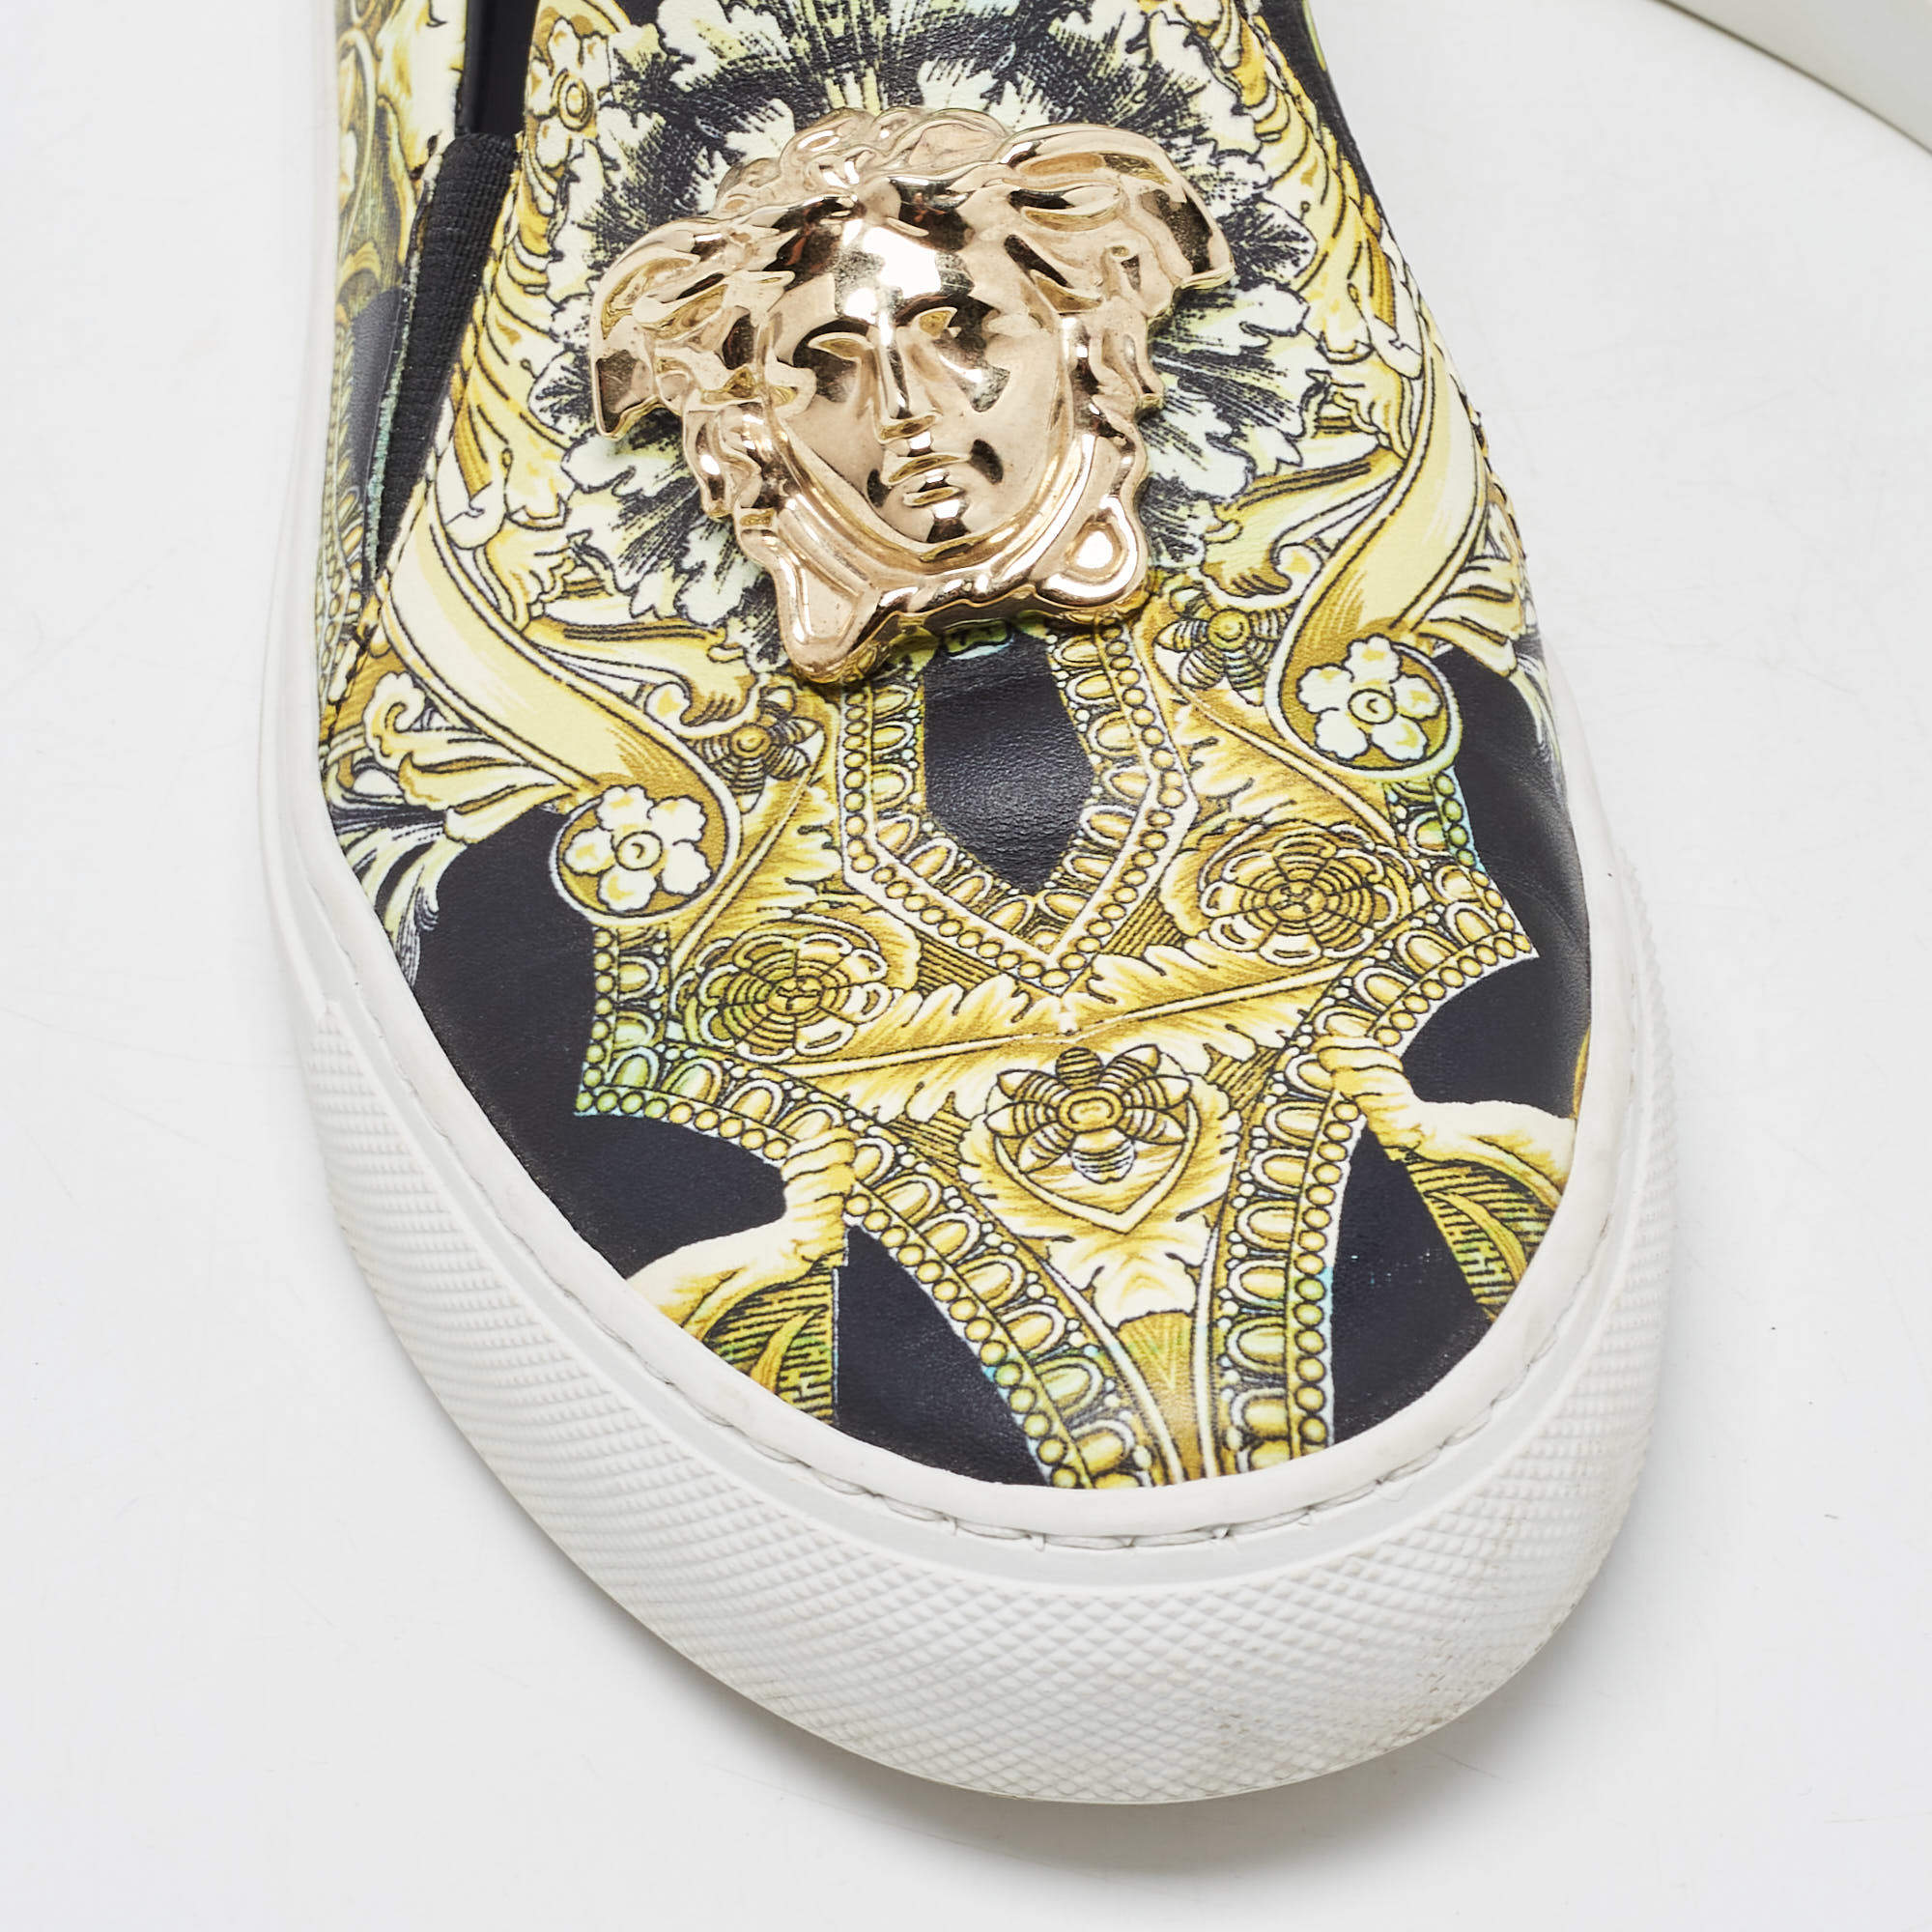 Versace Medusa Slip On Sneakers, $760, farfetch.com